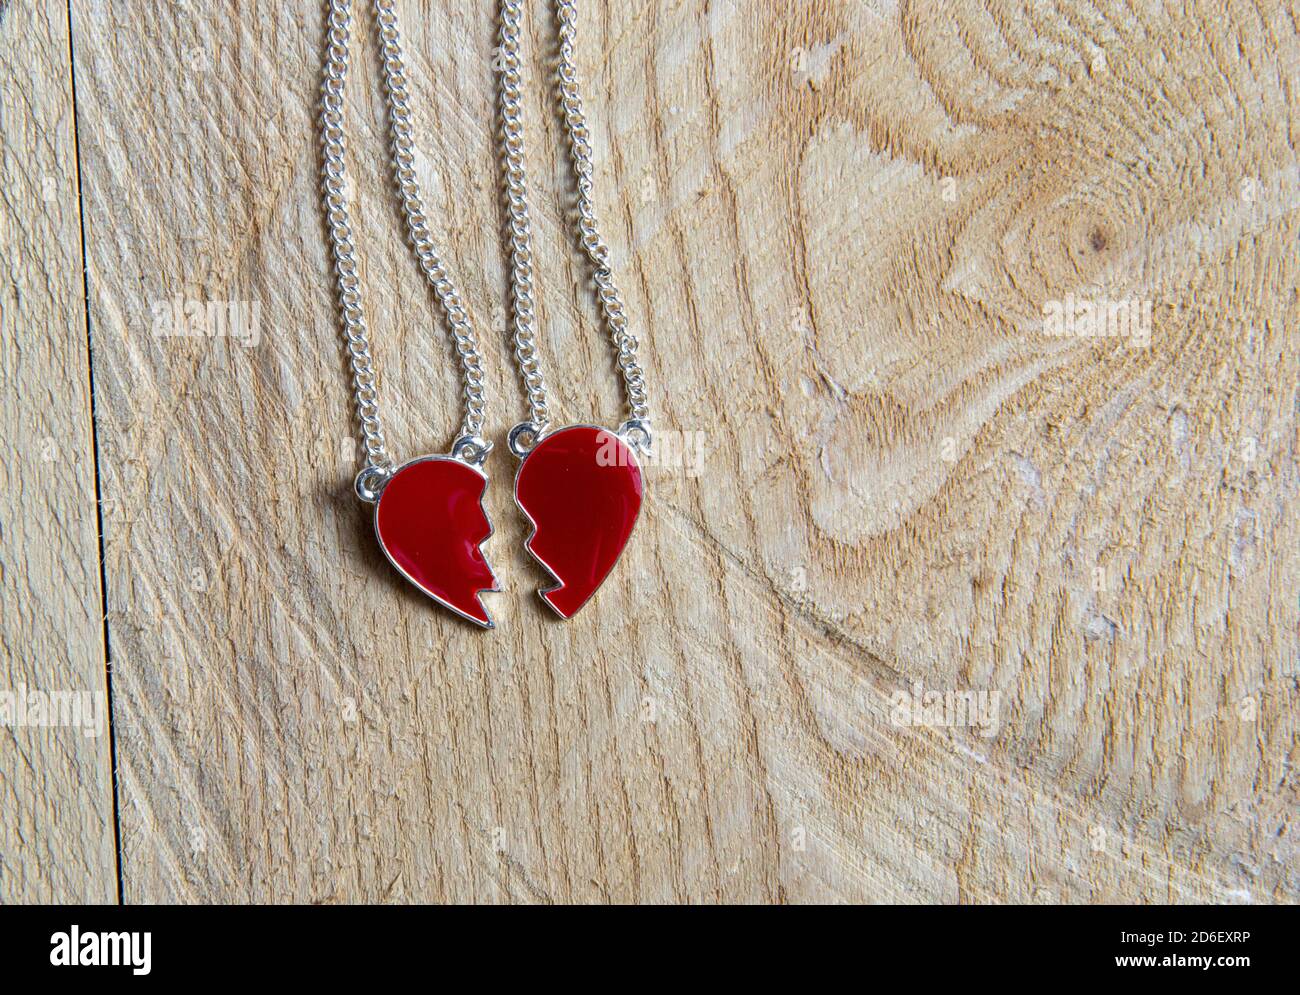 Broken Heart Pendant Necklace– A R M E D